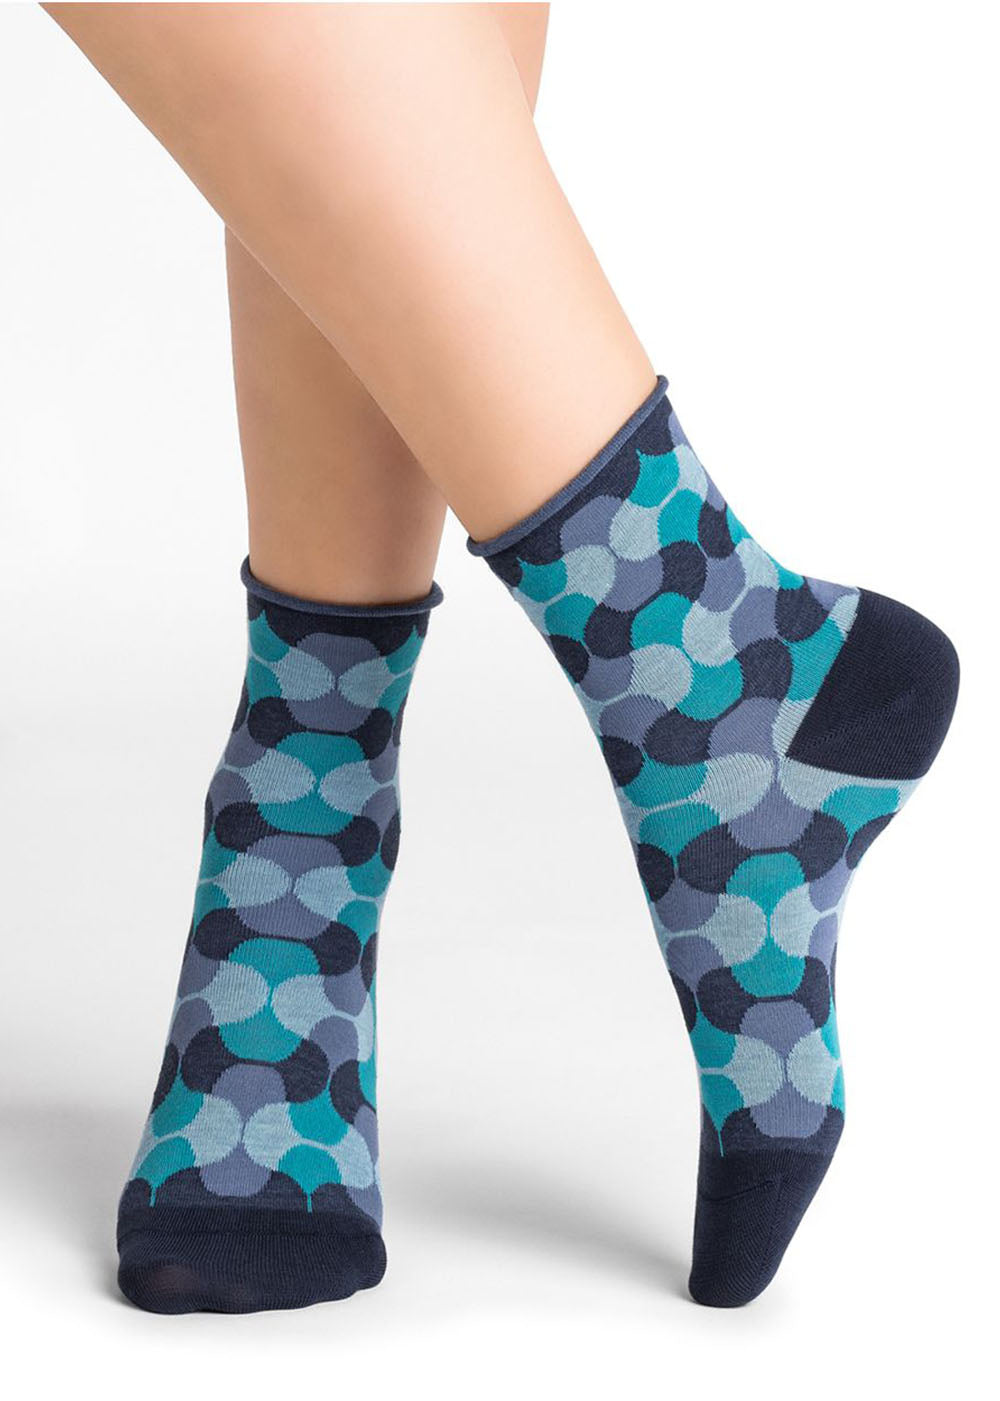 Psychedelic Pattern Ankle Socks - Jean - Bleuforêt Canada - Danali